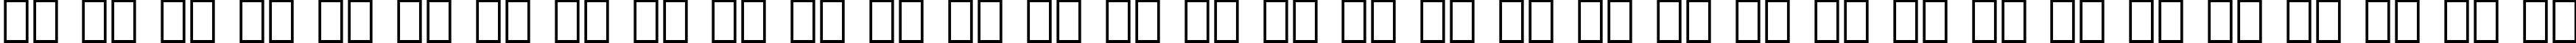 Пример написания русского алфавита шрифтом Zurich Ultra Black Extended BT